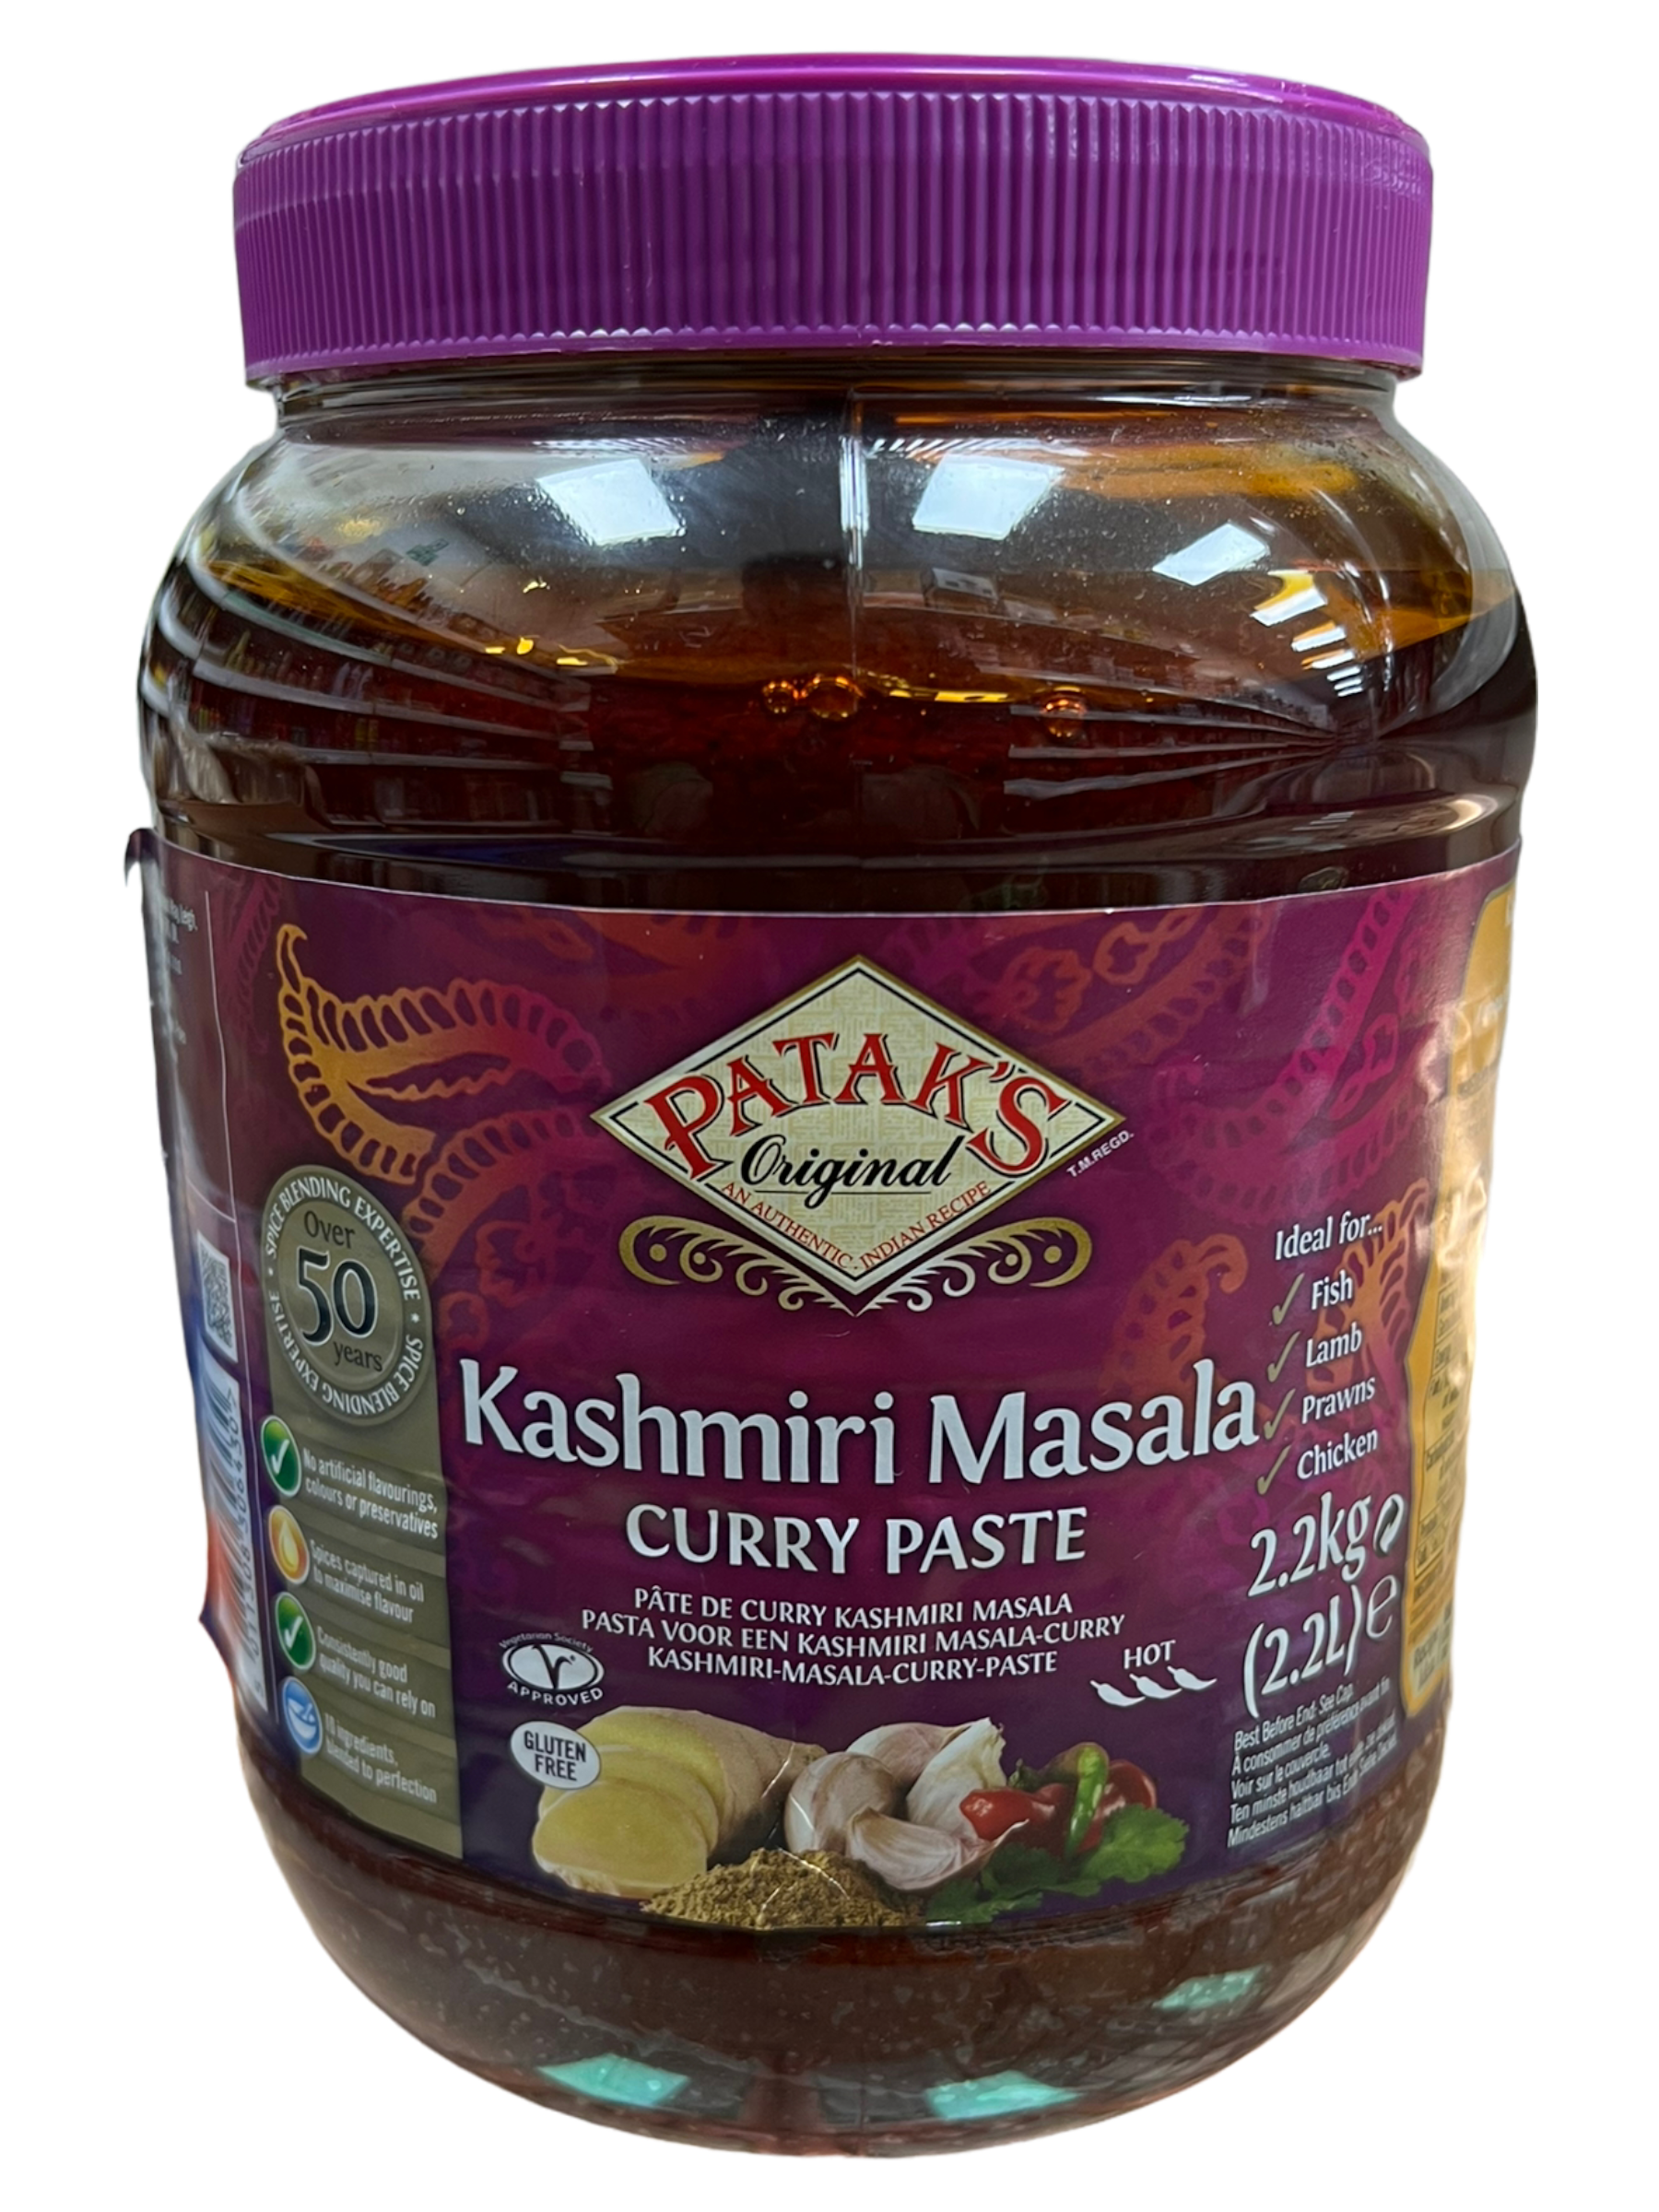 Patak's Original Kashmiri Masala Curry Paste